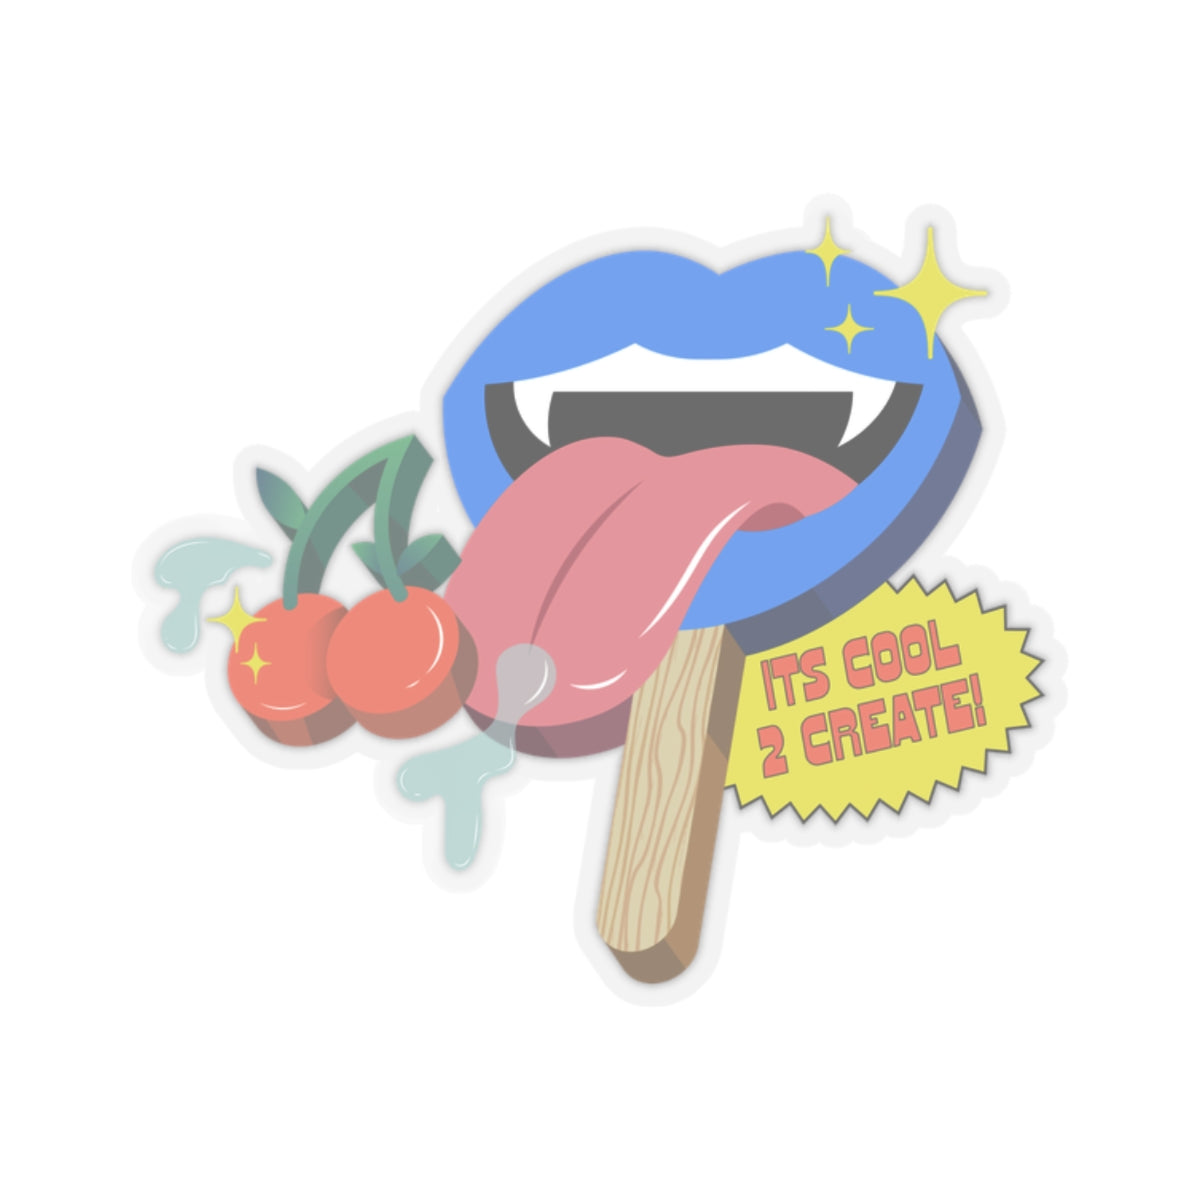 Cool 2 Create Popsicle Sticker 2x2"